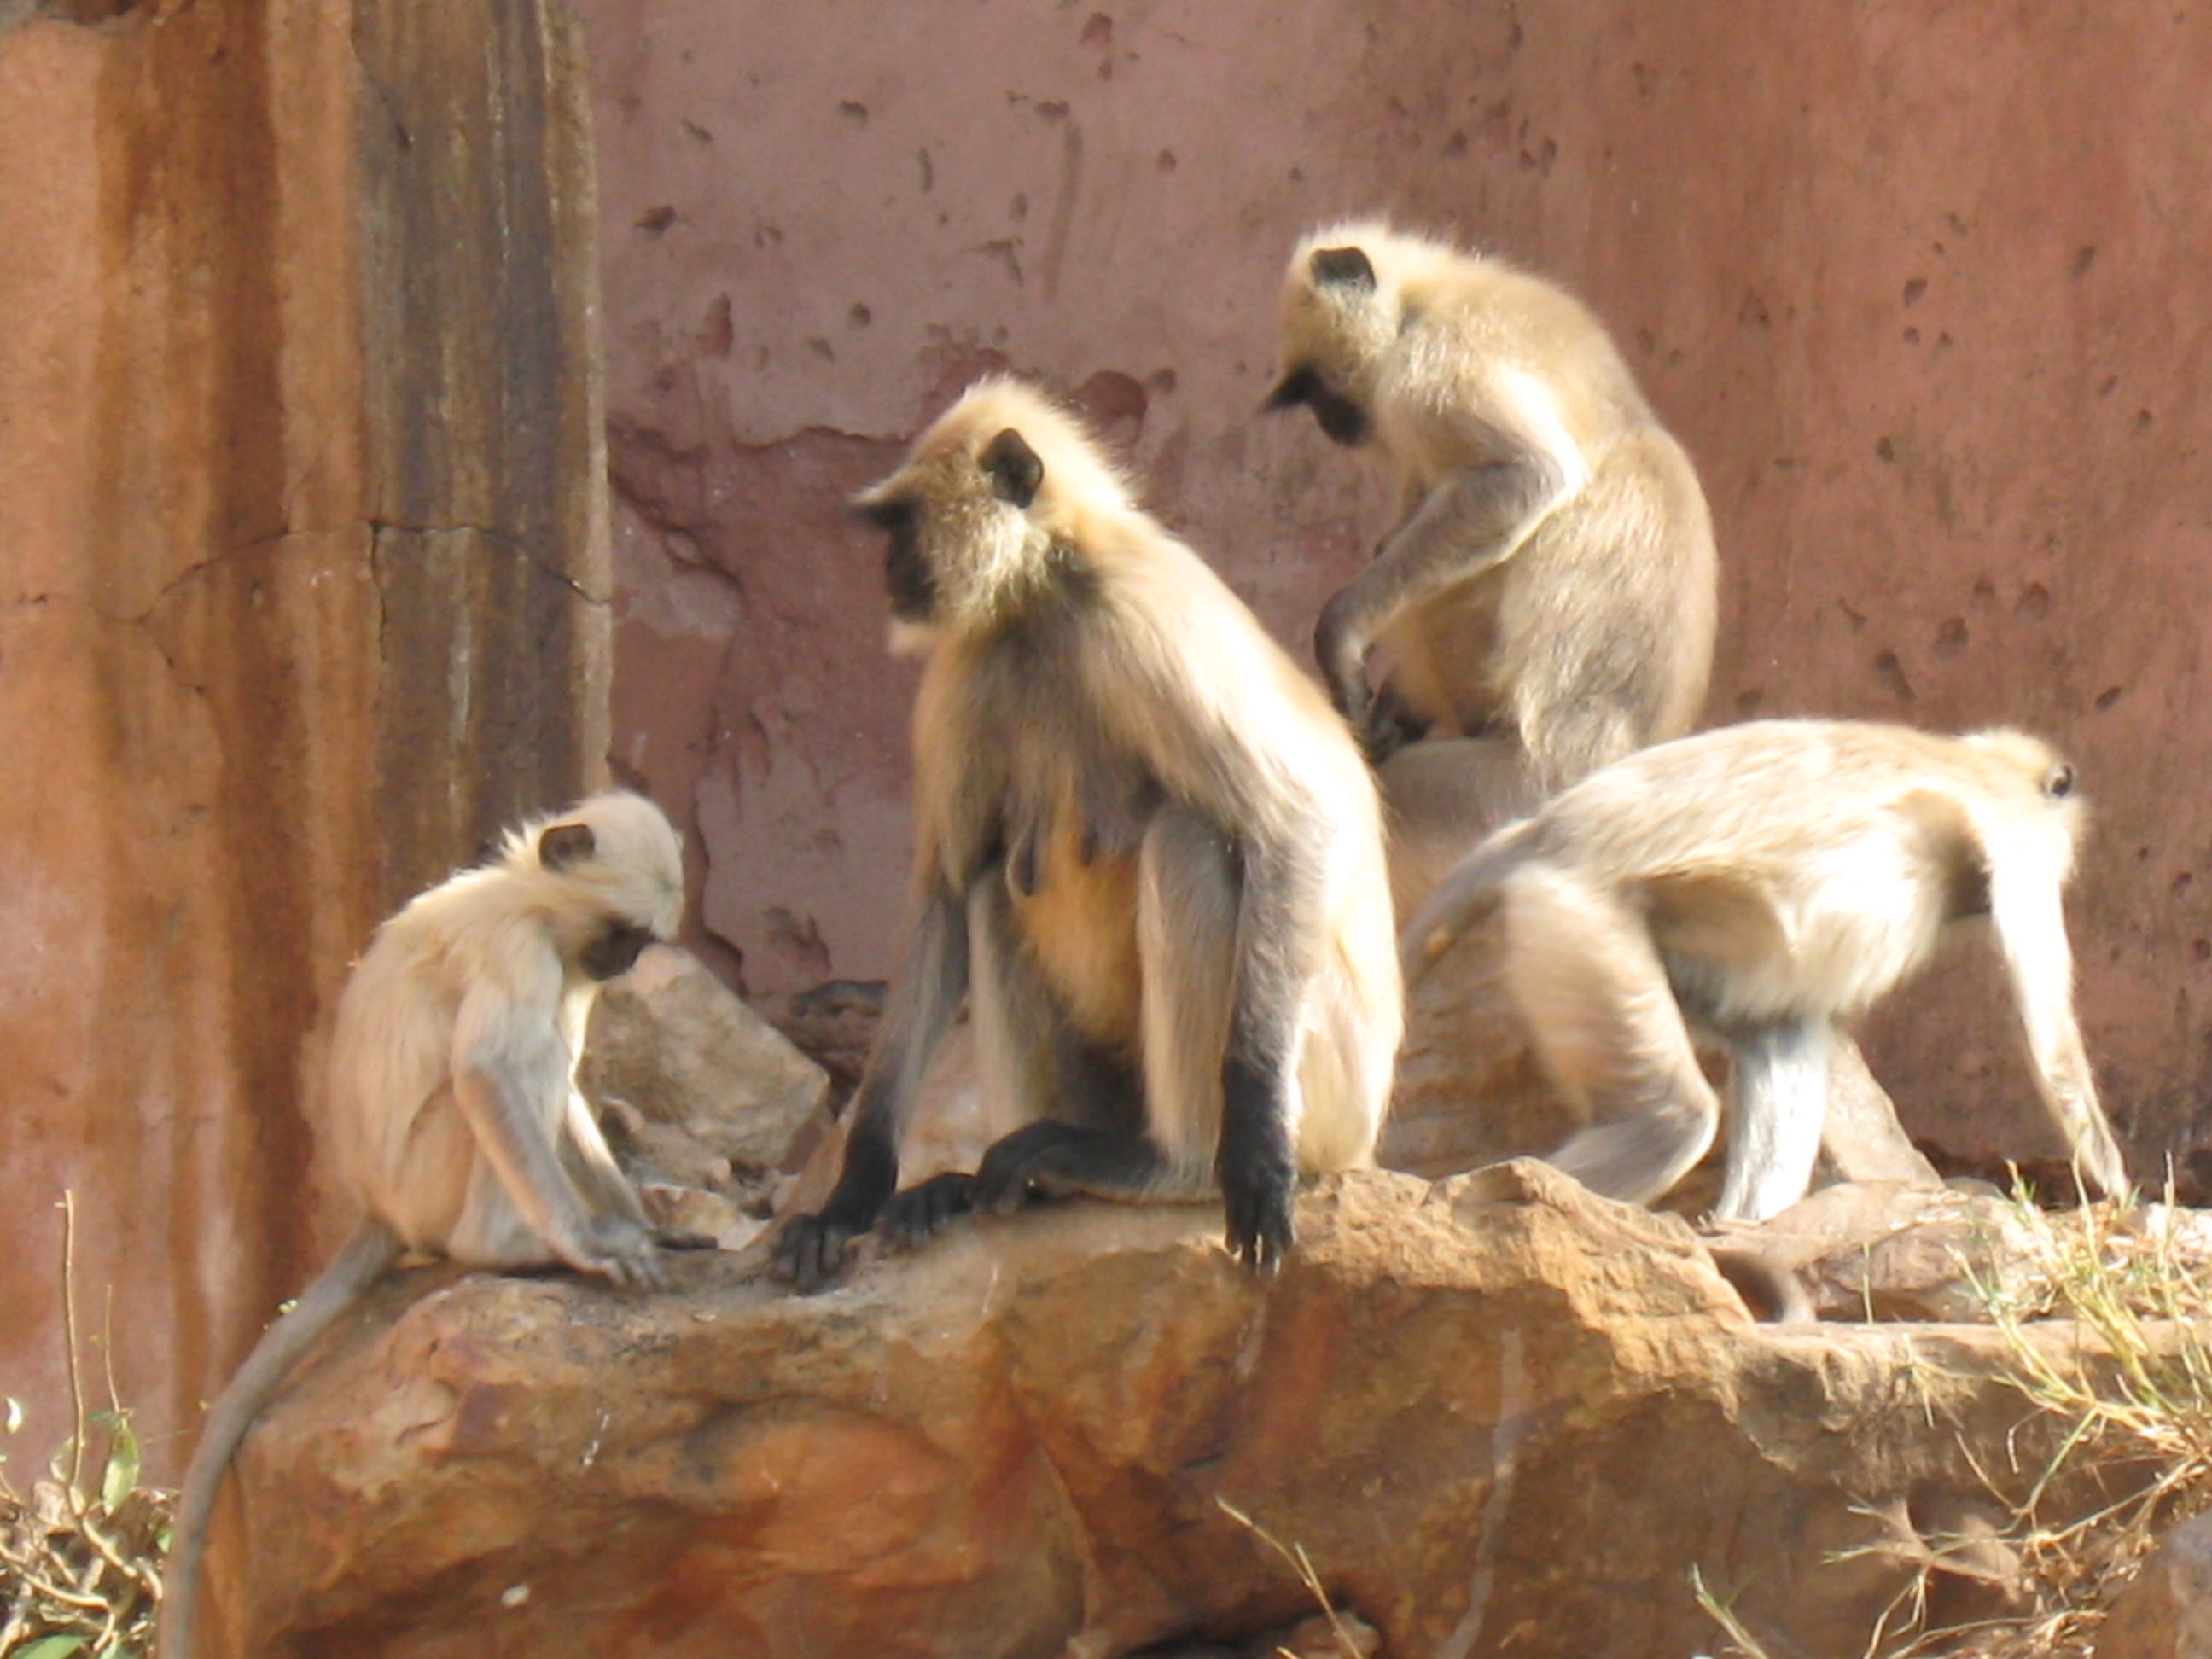 file-monkeys-in-india-jpg-wikipedia-the-free-encyclopedia